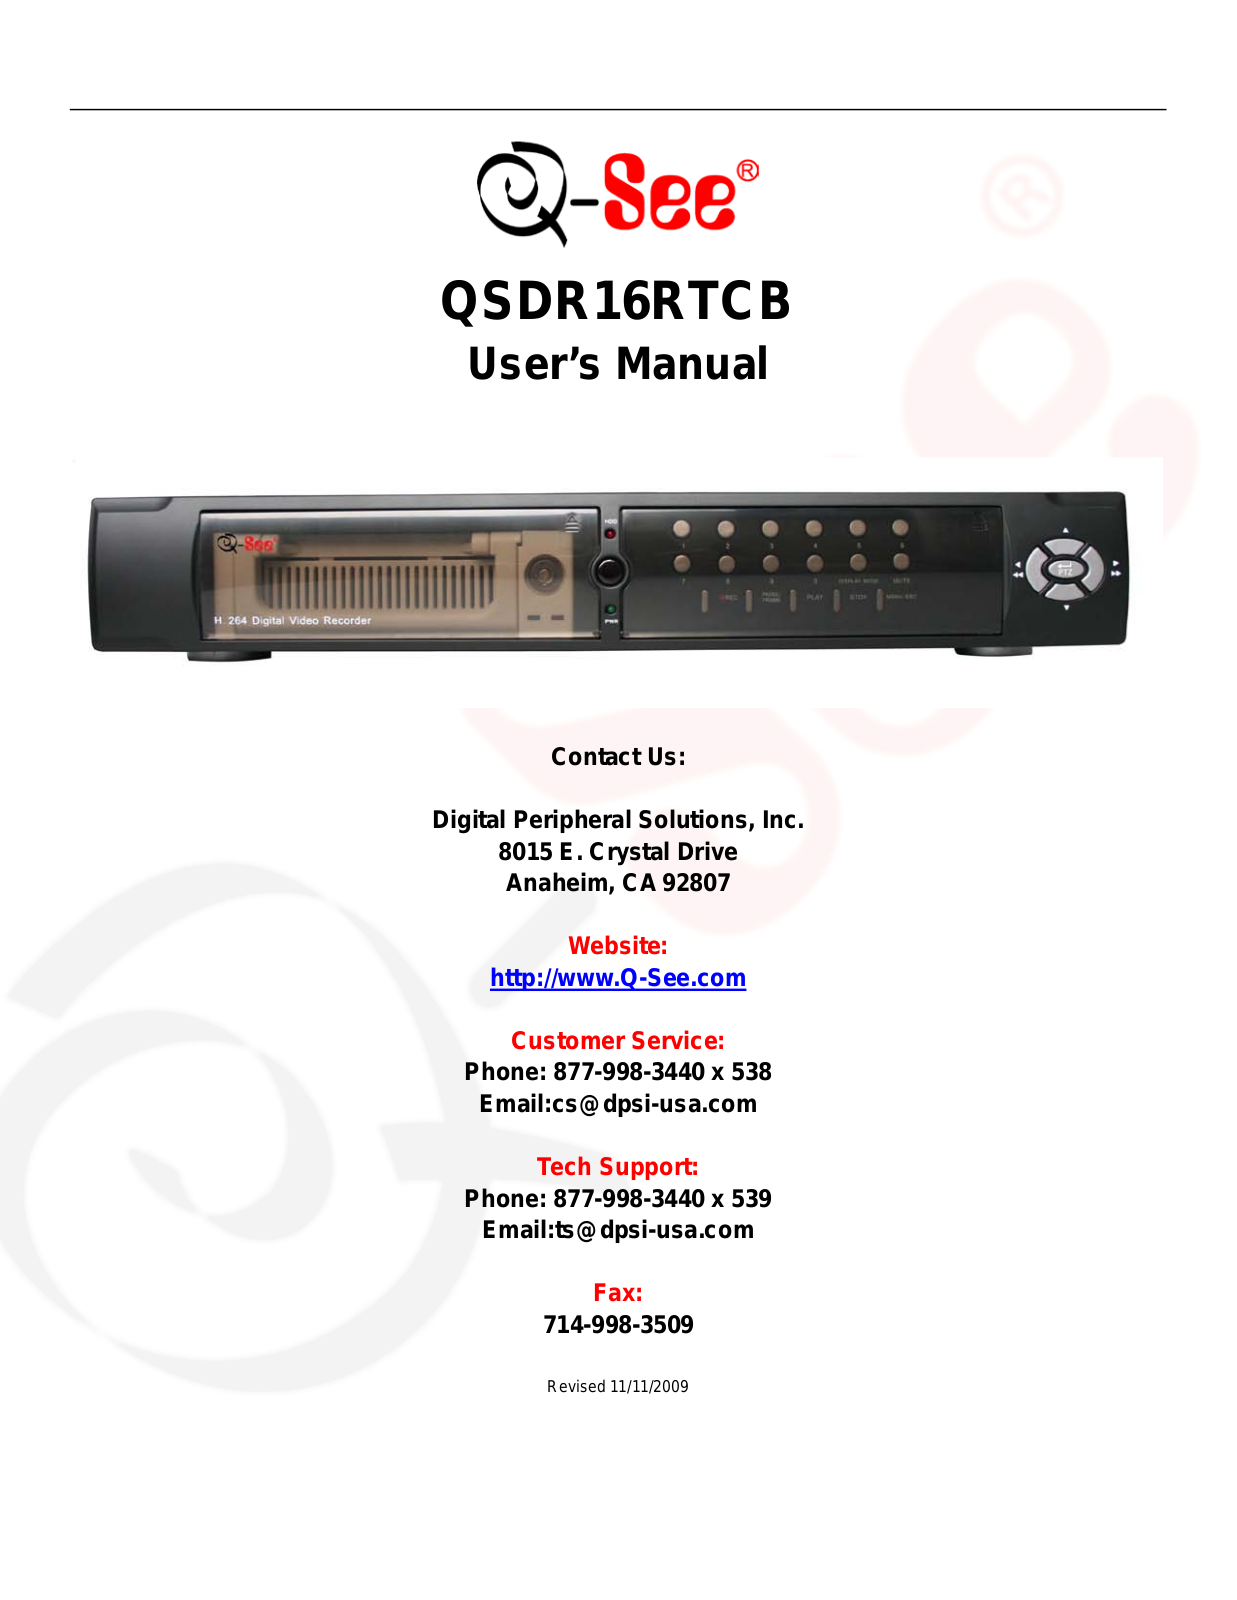 Q-See QSDR16RTCB Technical Manual